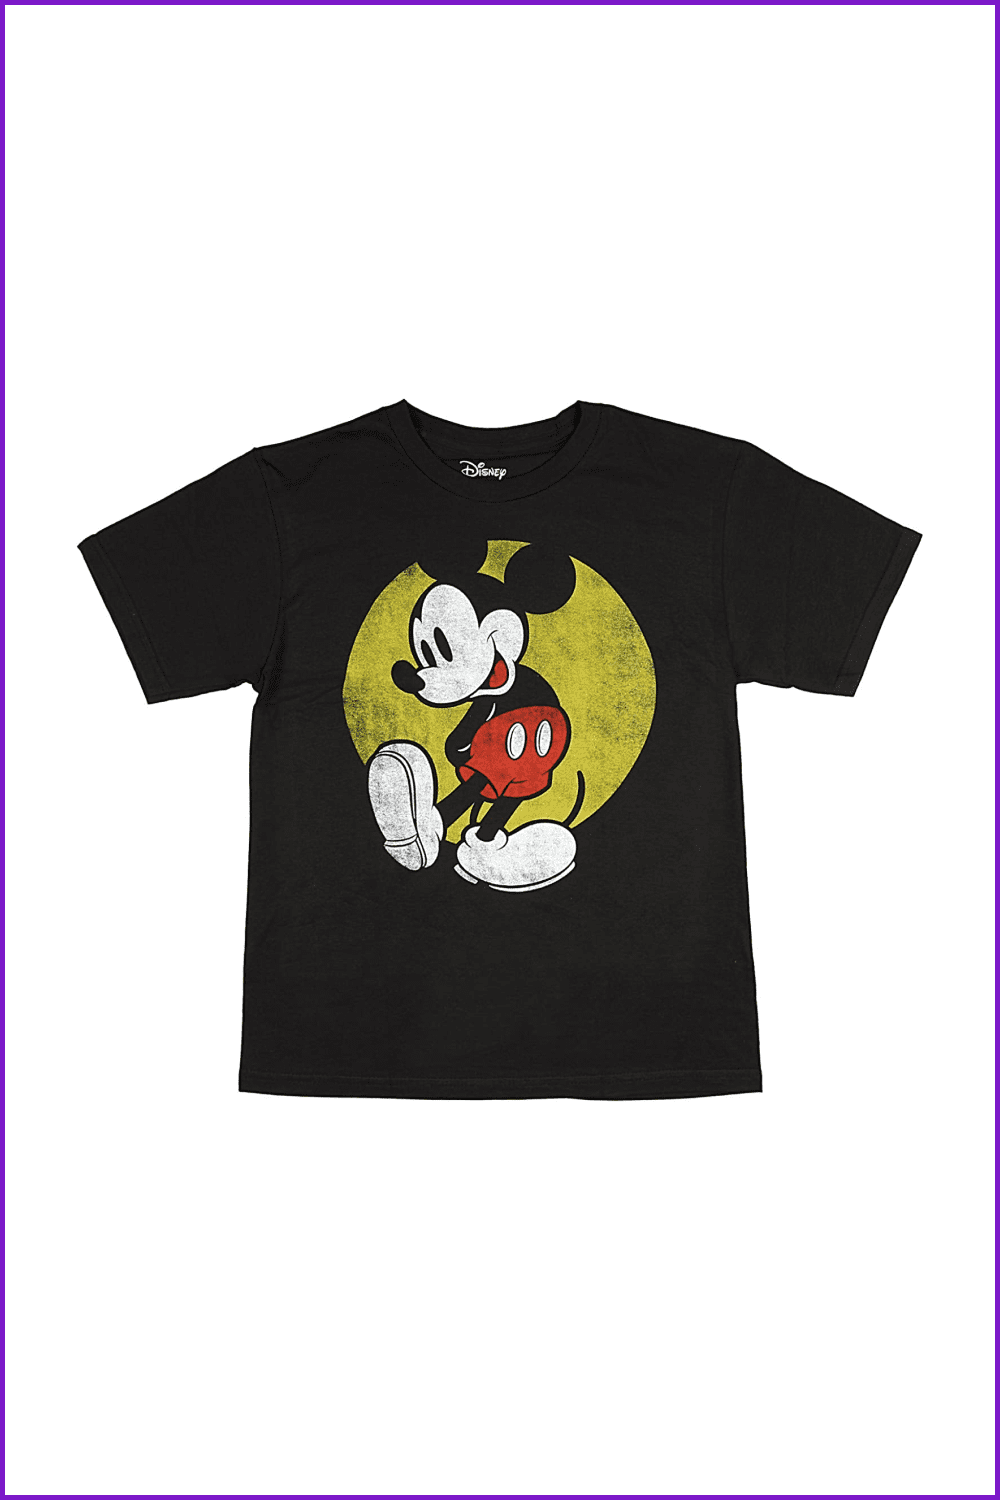 Disney Big Mickey Mouse Boy’s T-Shirt.